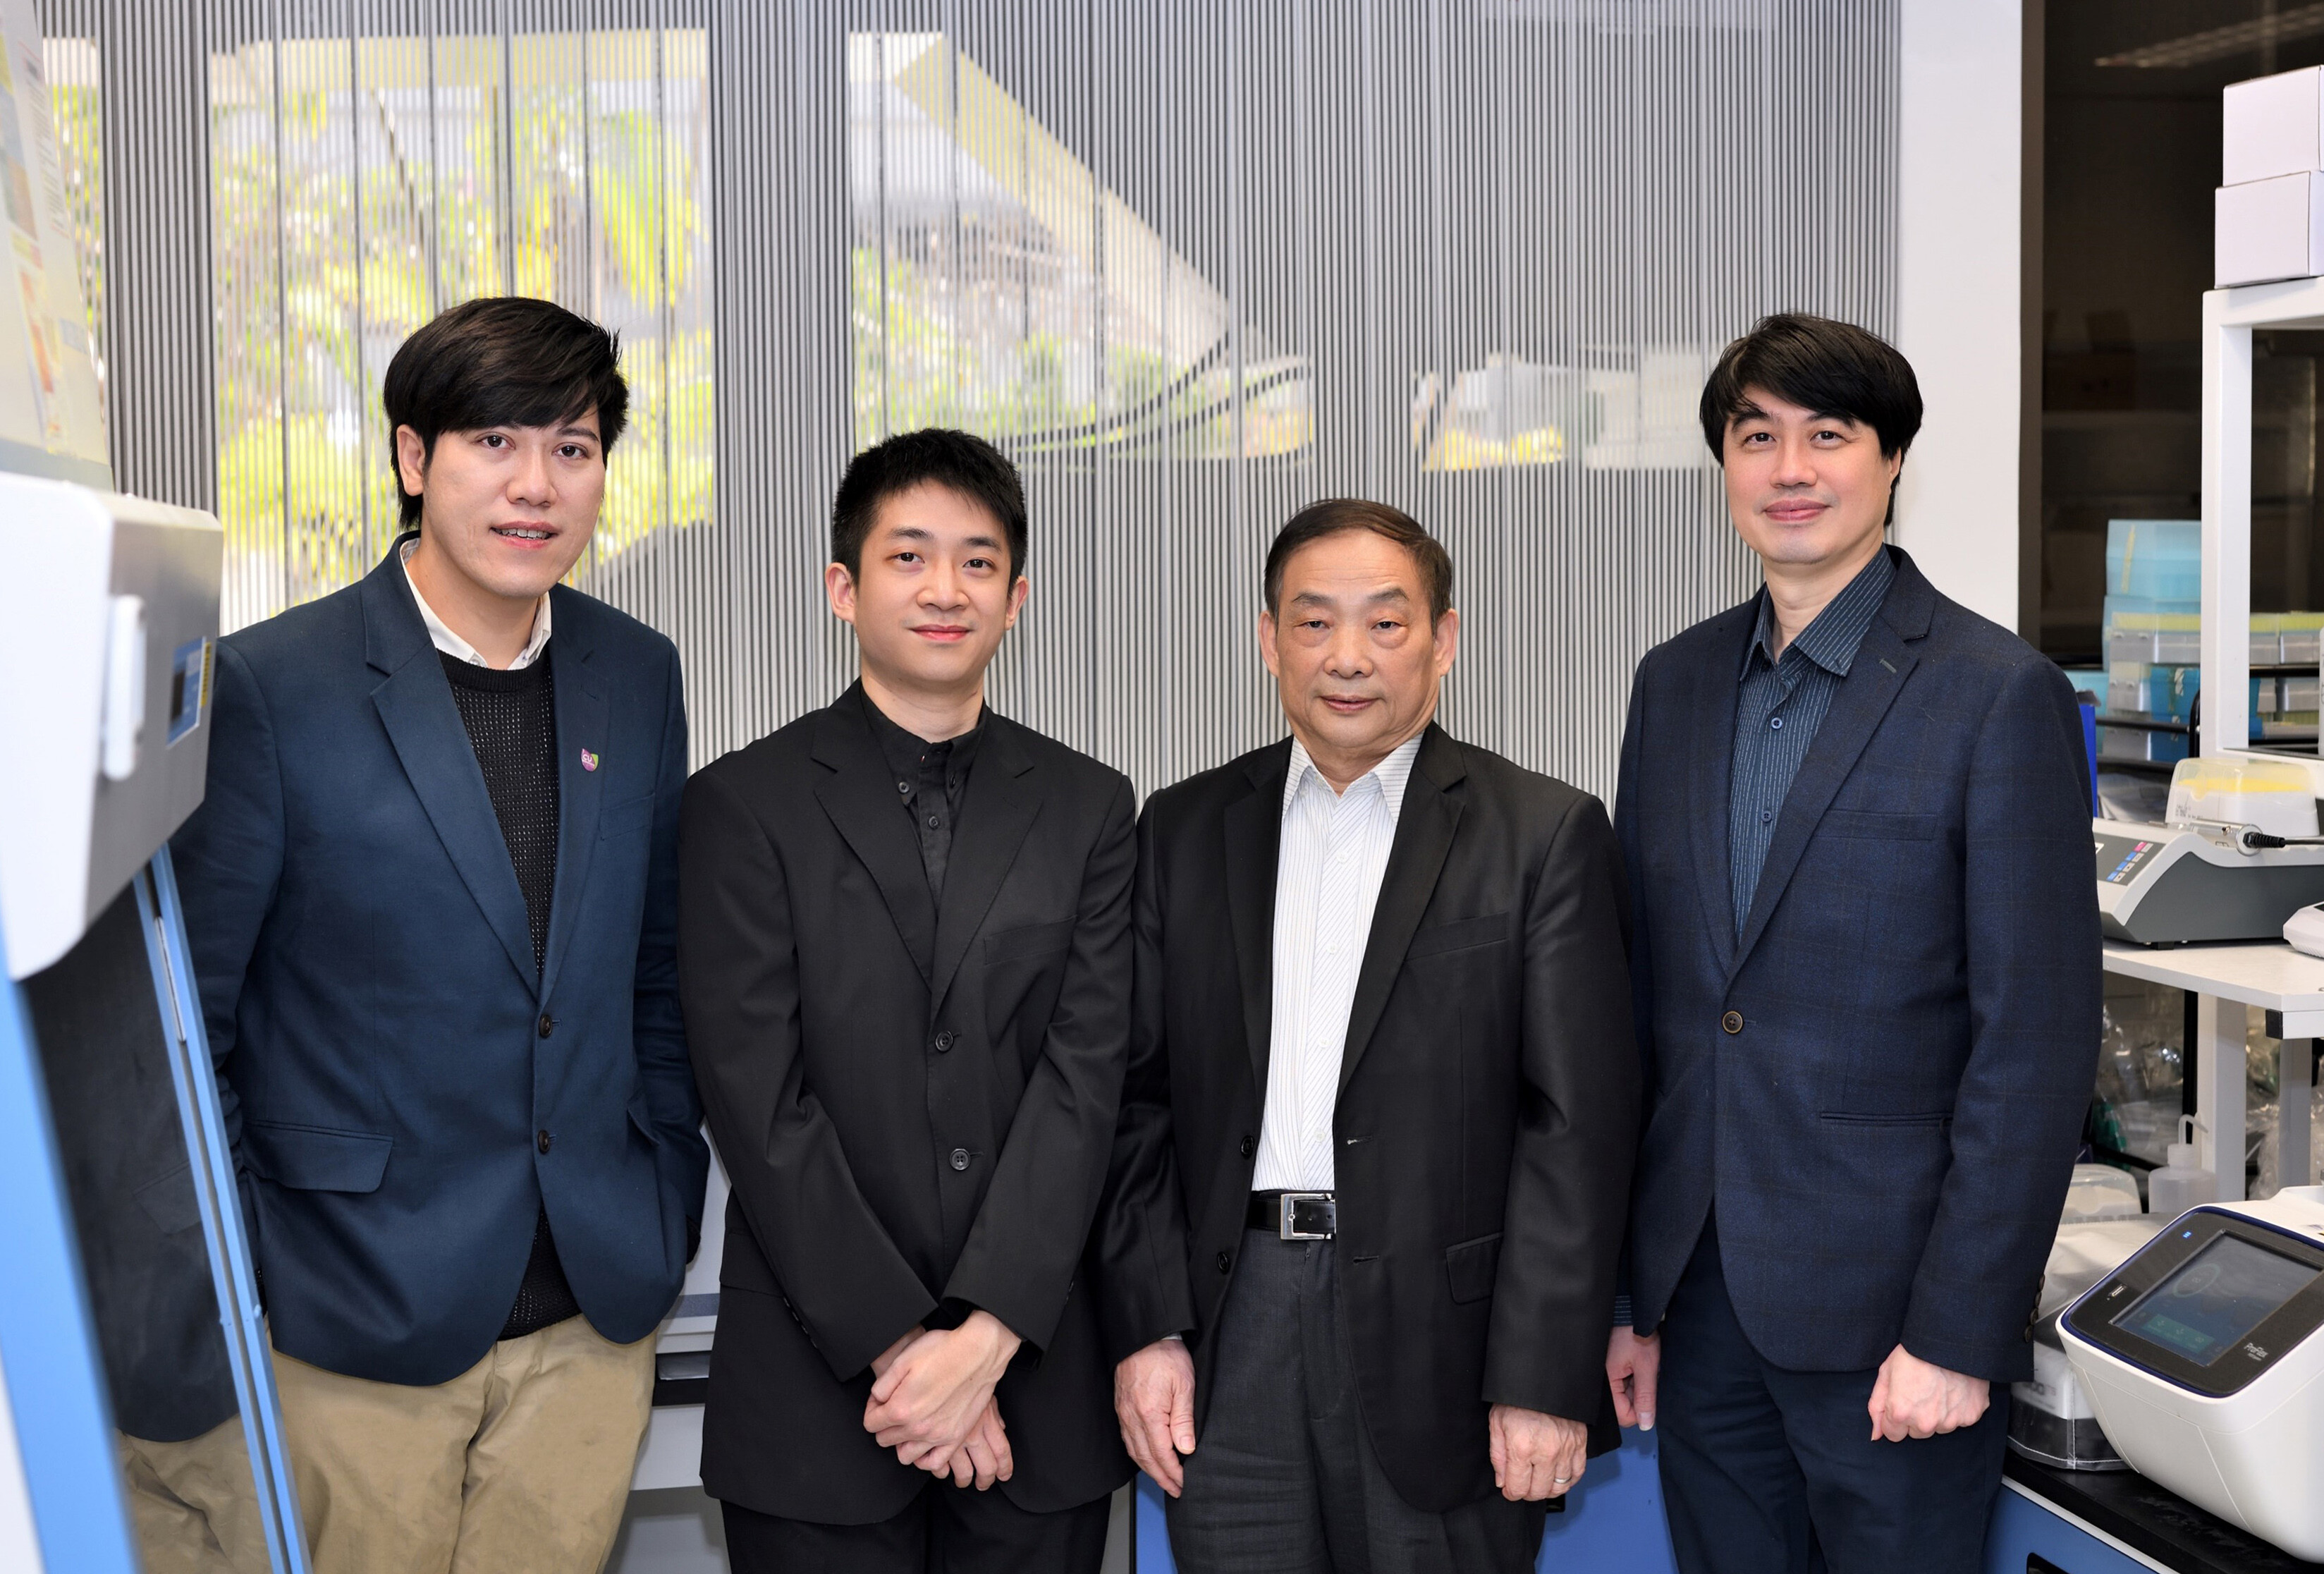 Professor Patrick Ming Kuen TANG, Dr. Philip Chiu Tsun TANG, Professor Hui Yao LAN and Professor Ka Fai TO